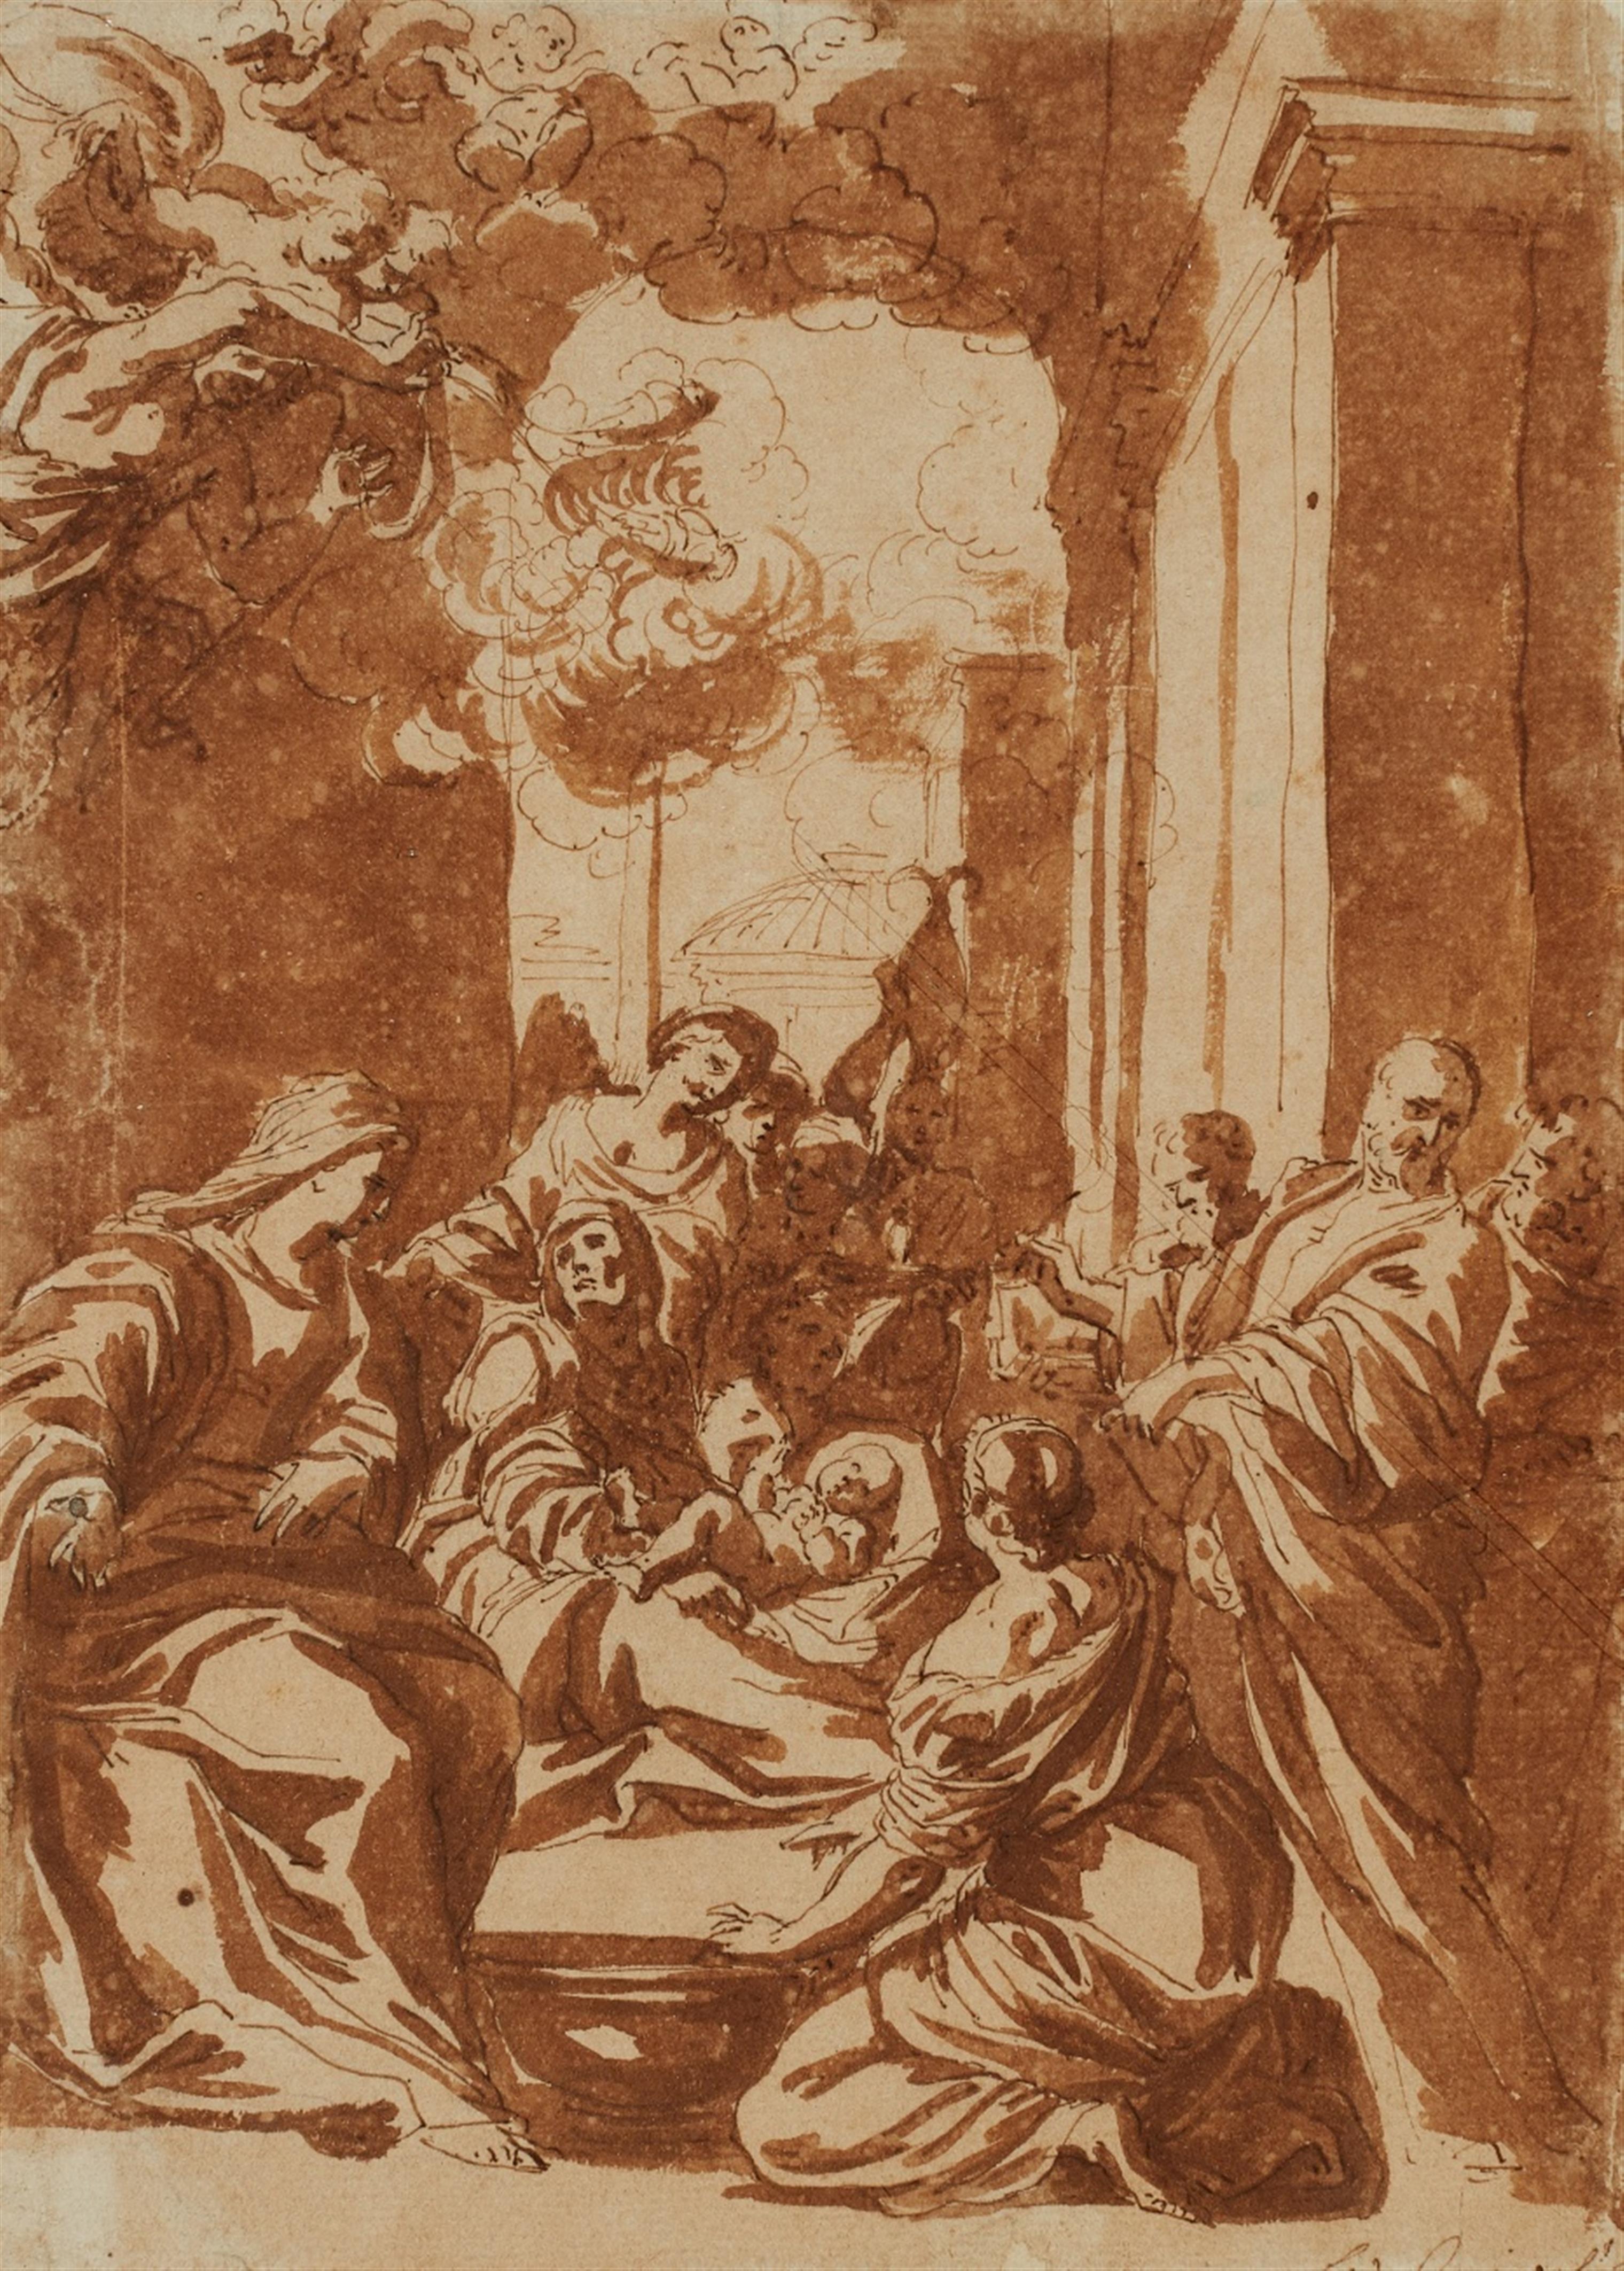 Lodovico Carracci, attributed to - The Nativity - image-1